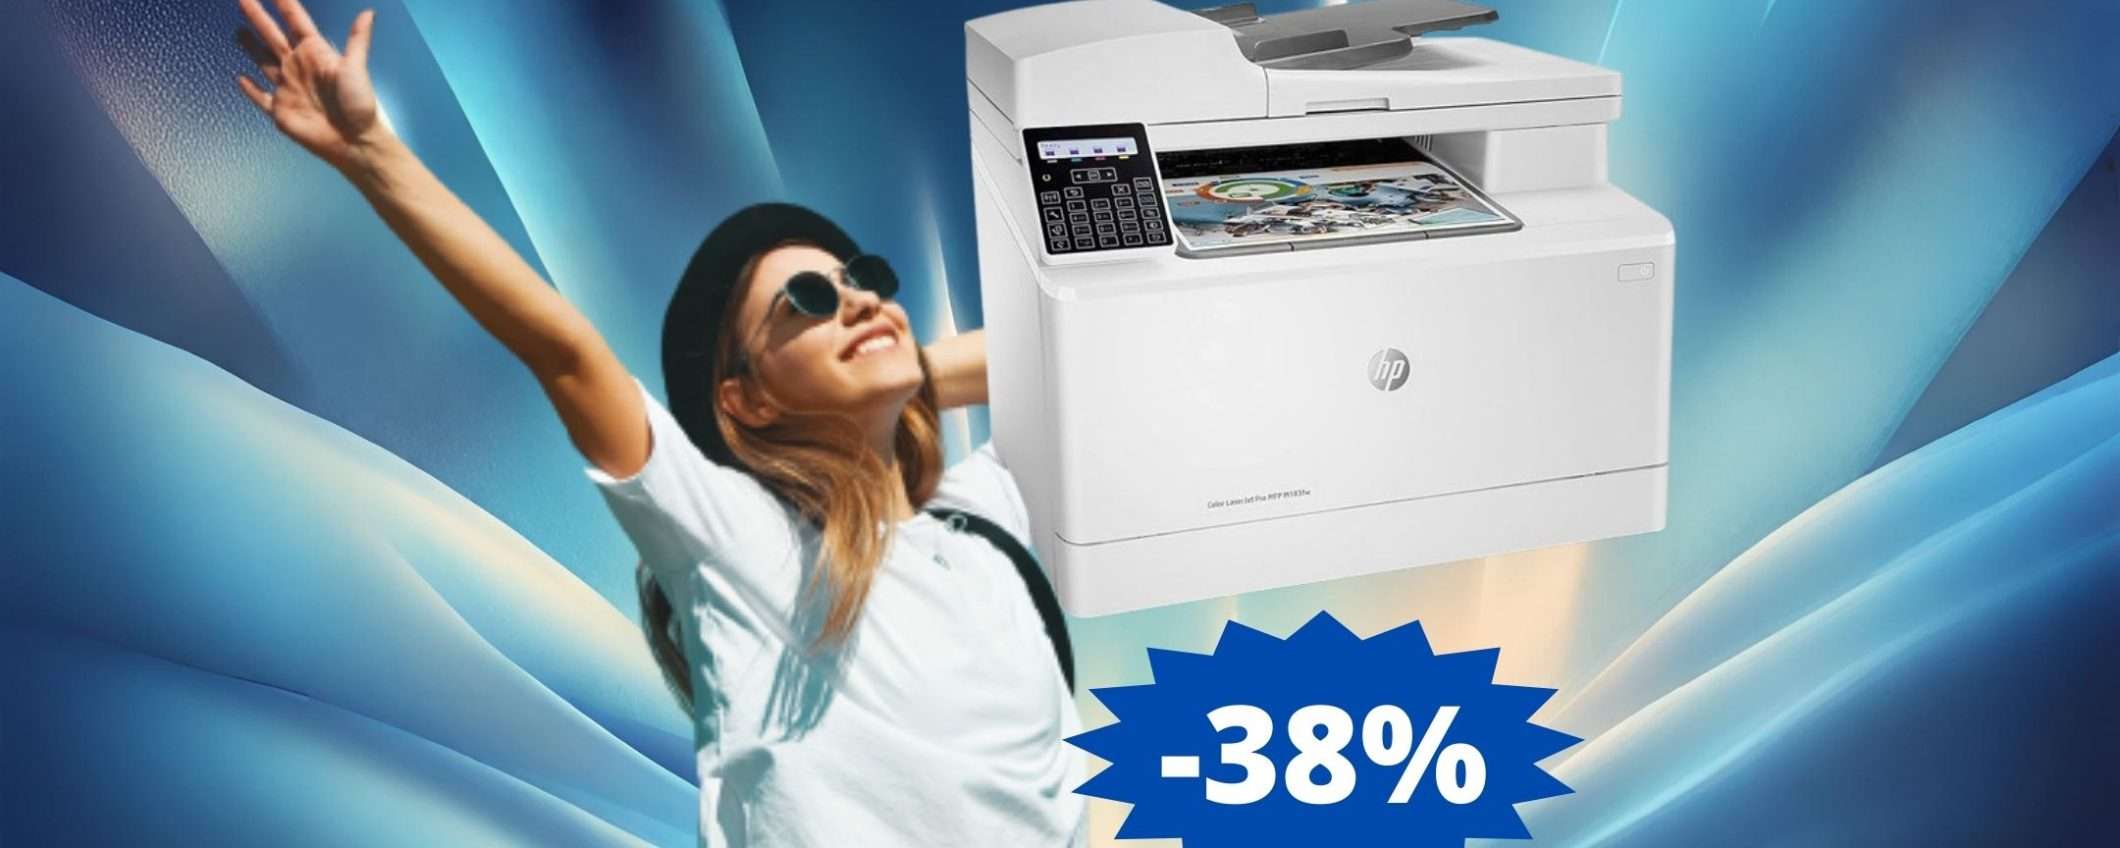 Stampante HP Color LaserJet Pro: sconto ESCLUSIVO del 38%